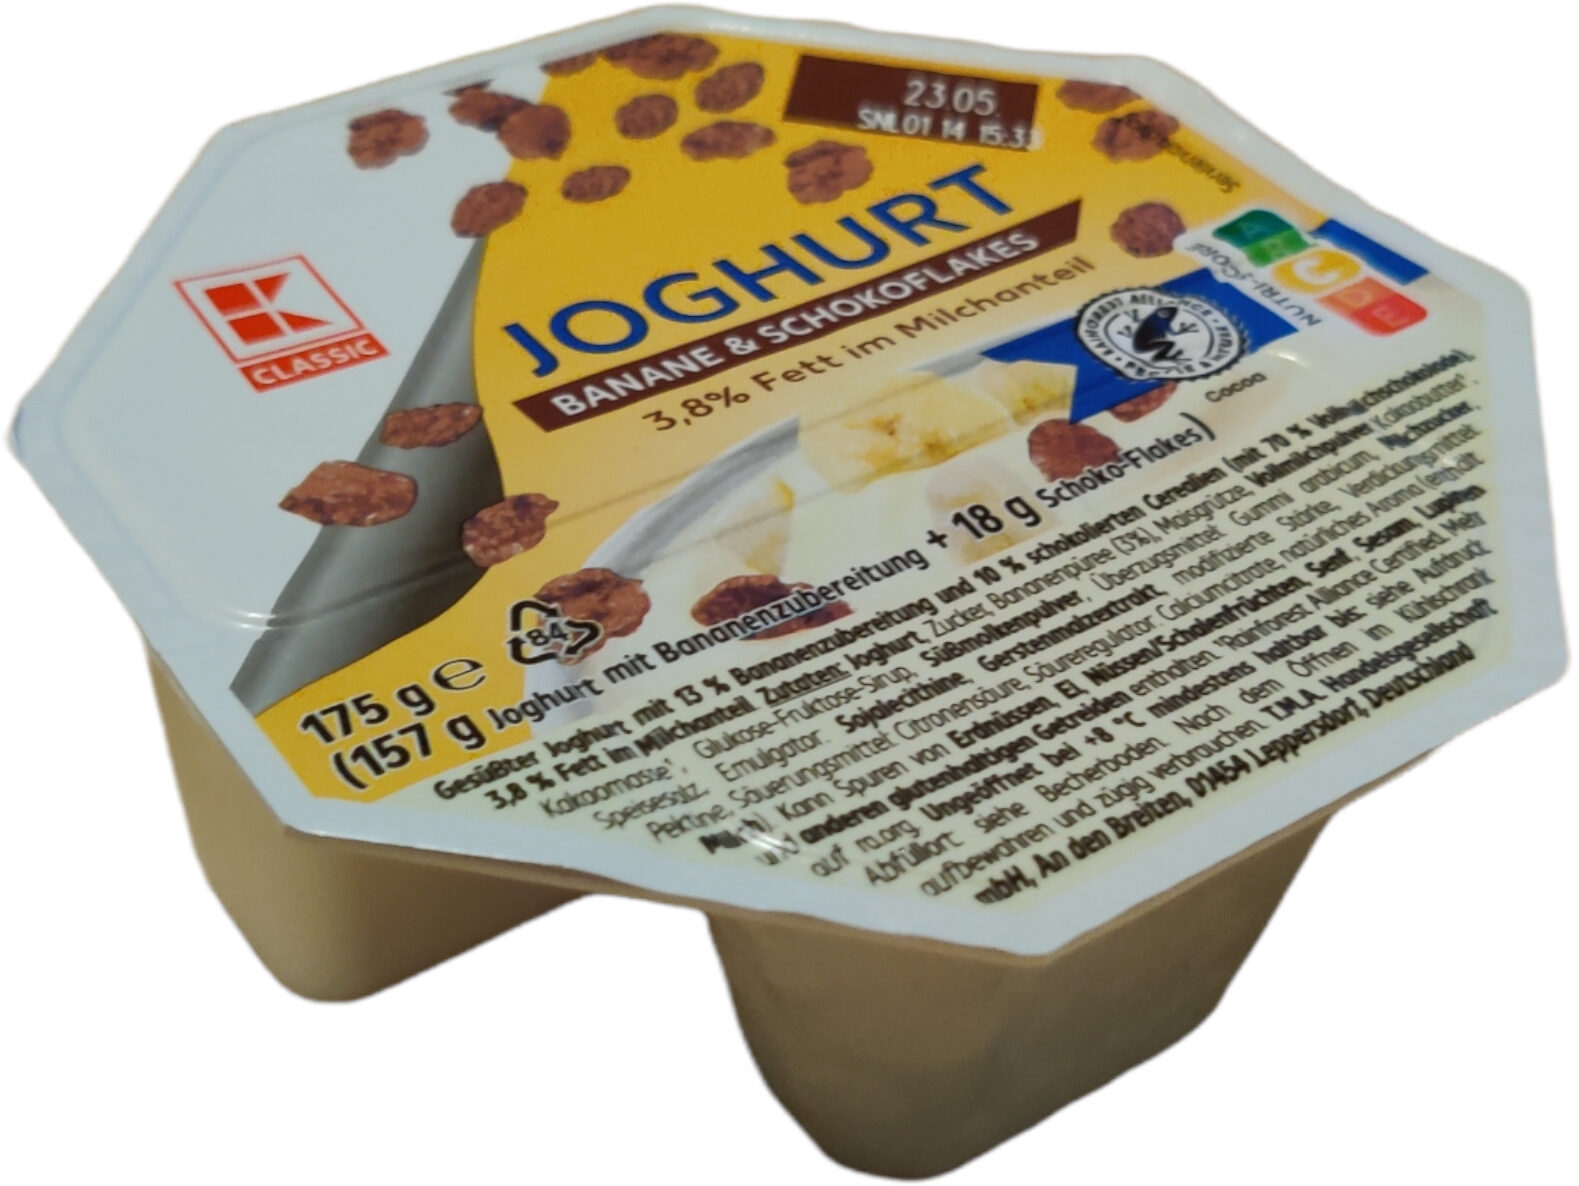 K-Classic Johgurt Banane & Schokoflakes - Product - de